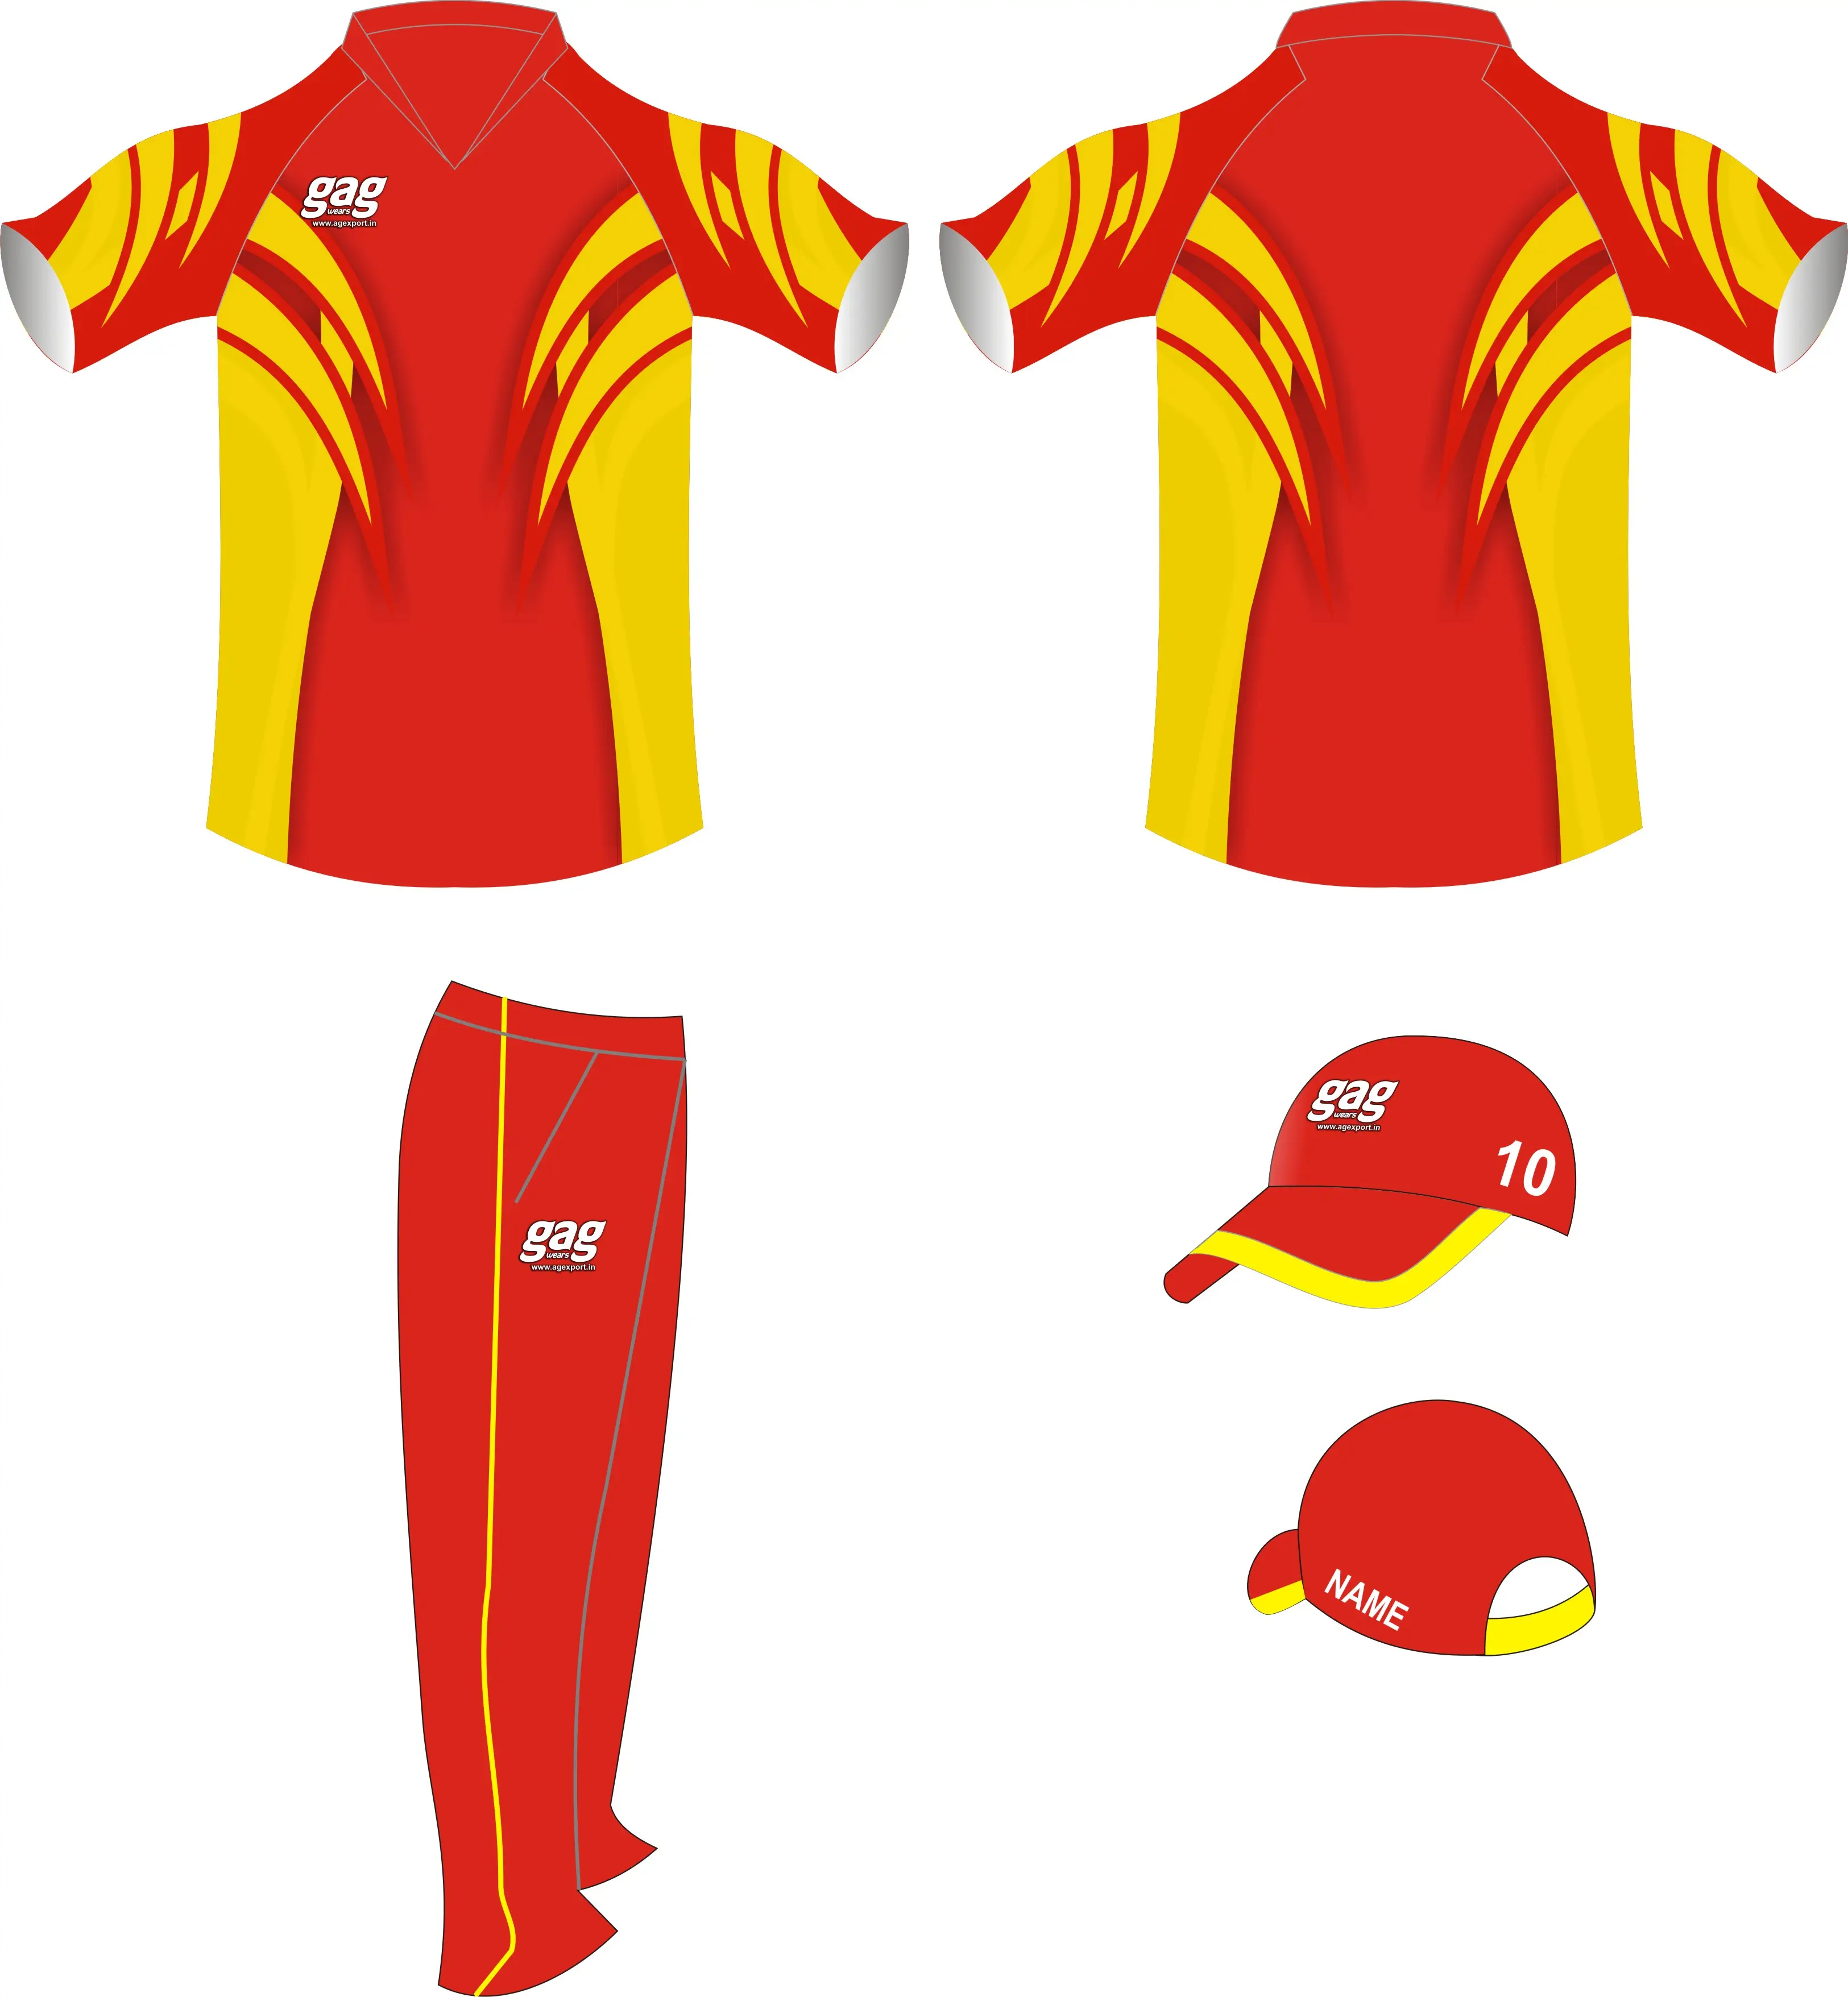 online shopping indian team jersey